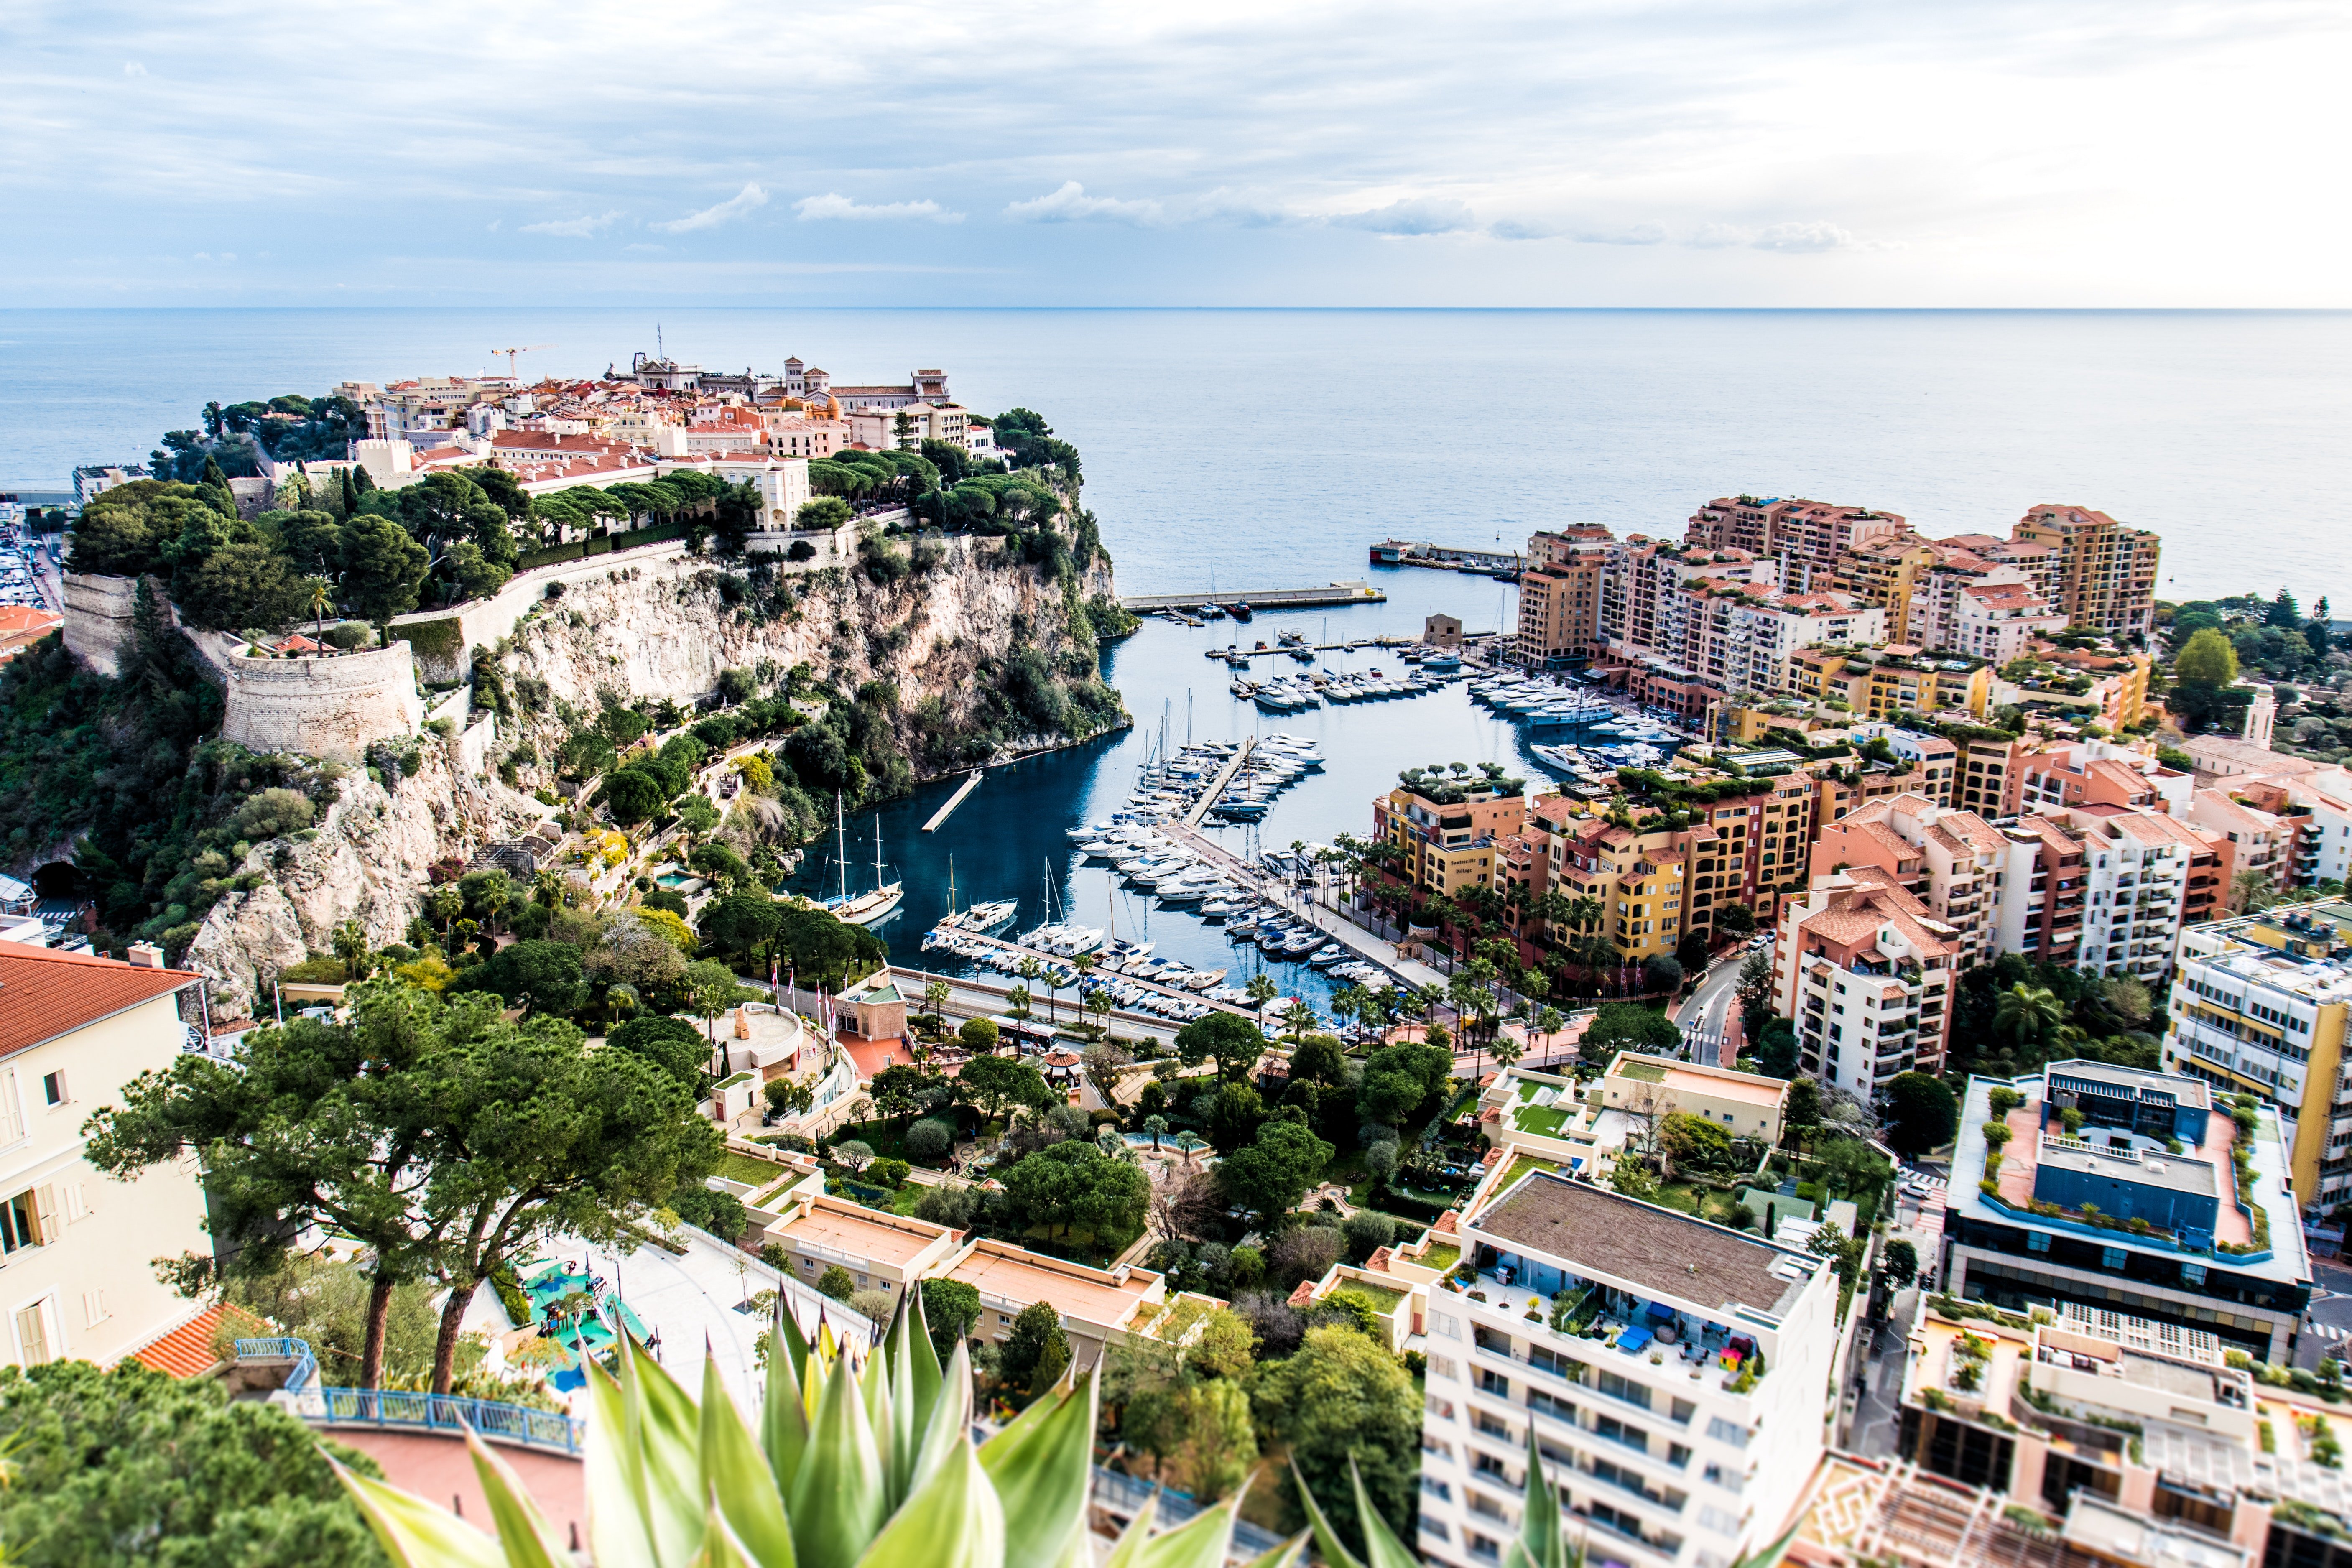 "So I'm renting a villa in Nice, or Monte Carlo..." | Source: Unsplash